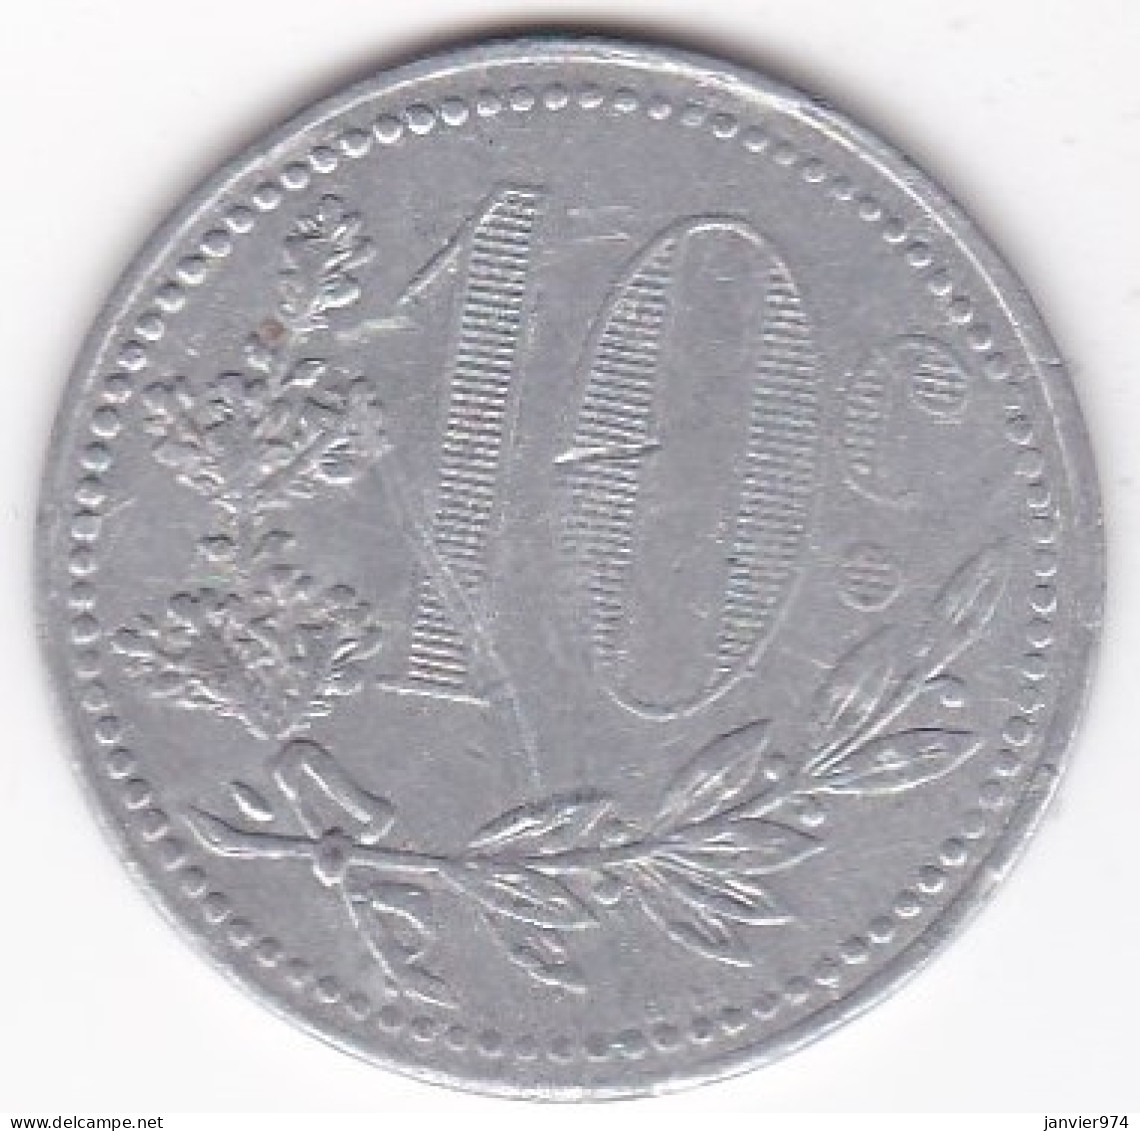 Chambre De Commerce D’Alger , 10 Centimes 1918, En Aluminium, Lec# 138 - Algérie